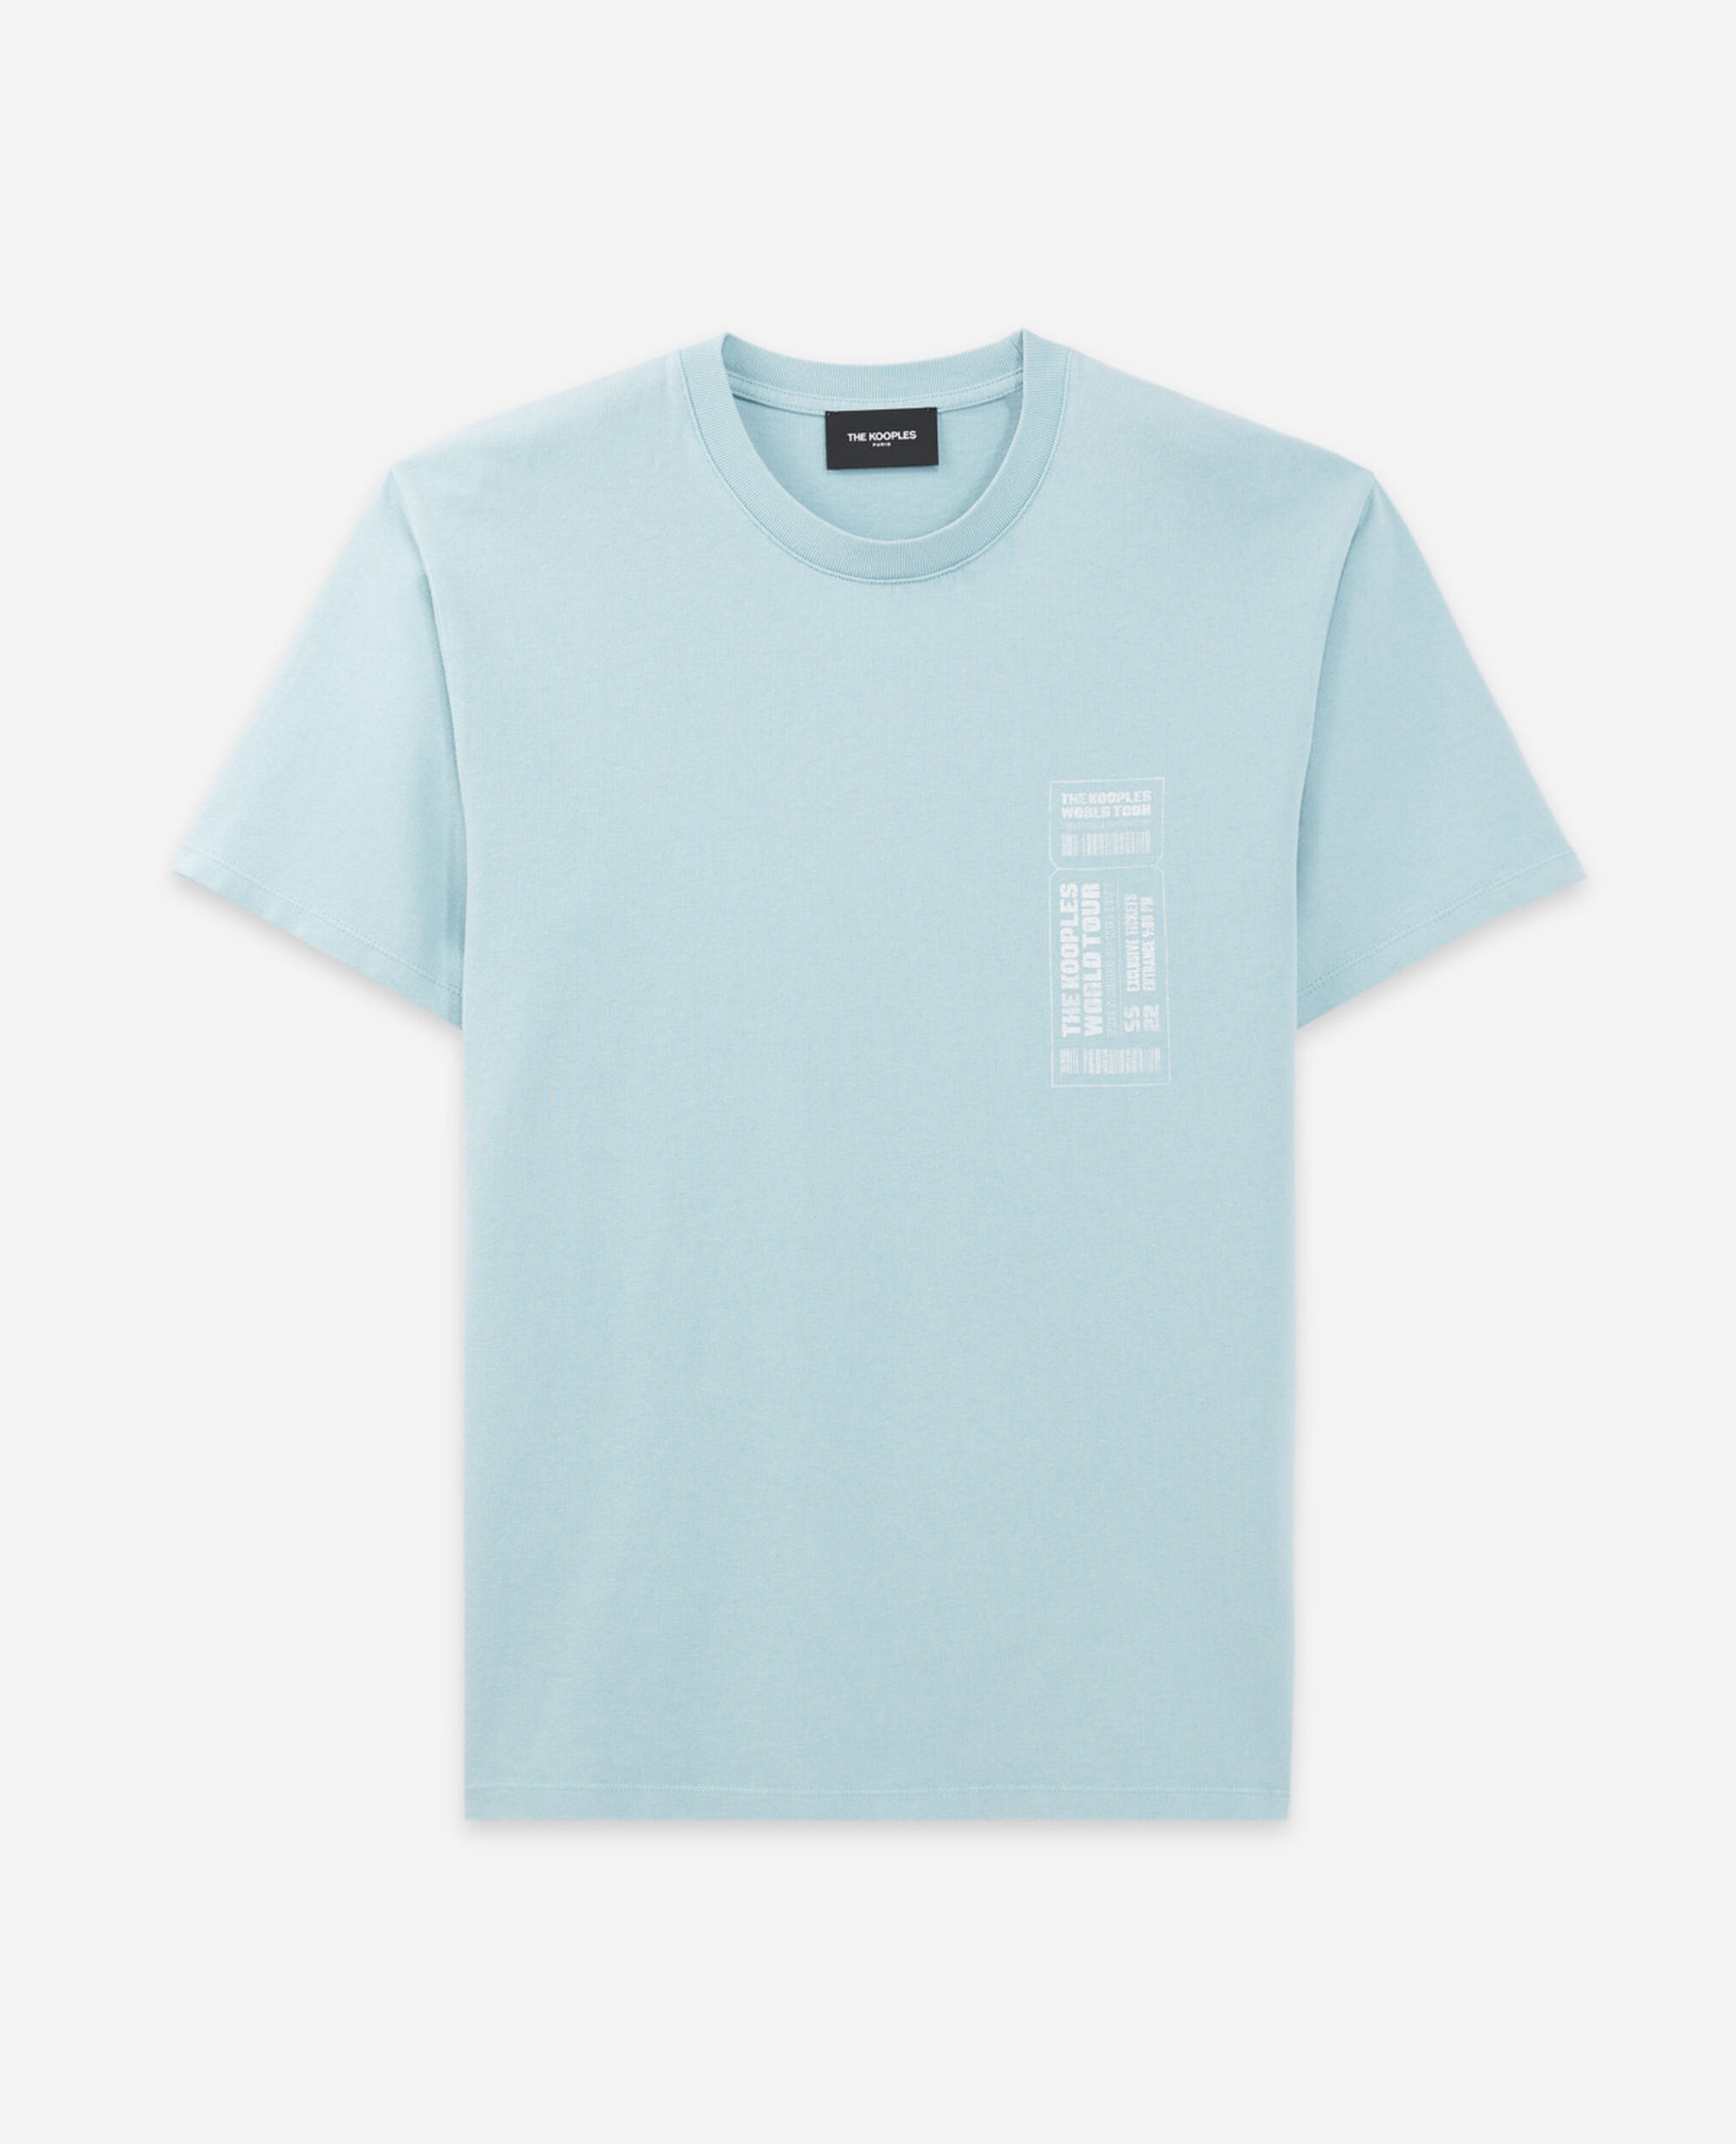 T-shirt bleu ciel coton logo contrasté, BLUE SKY, hi-res image number null